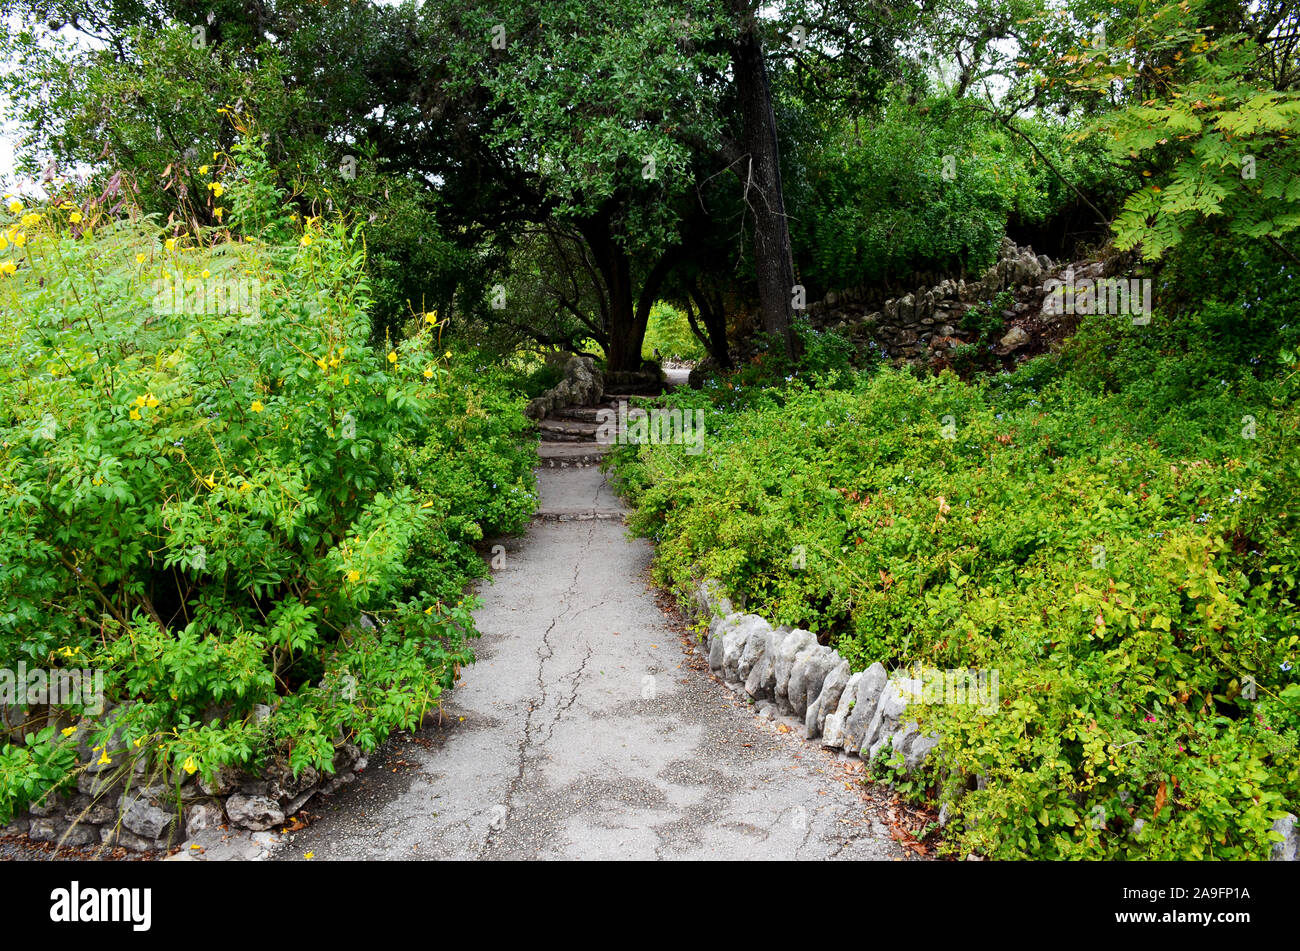 Japanese Tea Garden In San Antonio Texas Picturesque Landscaped